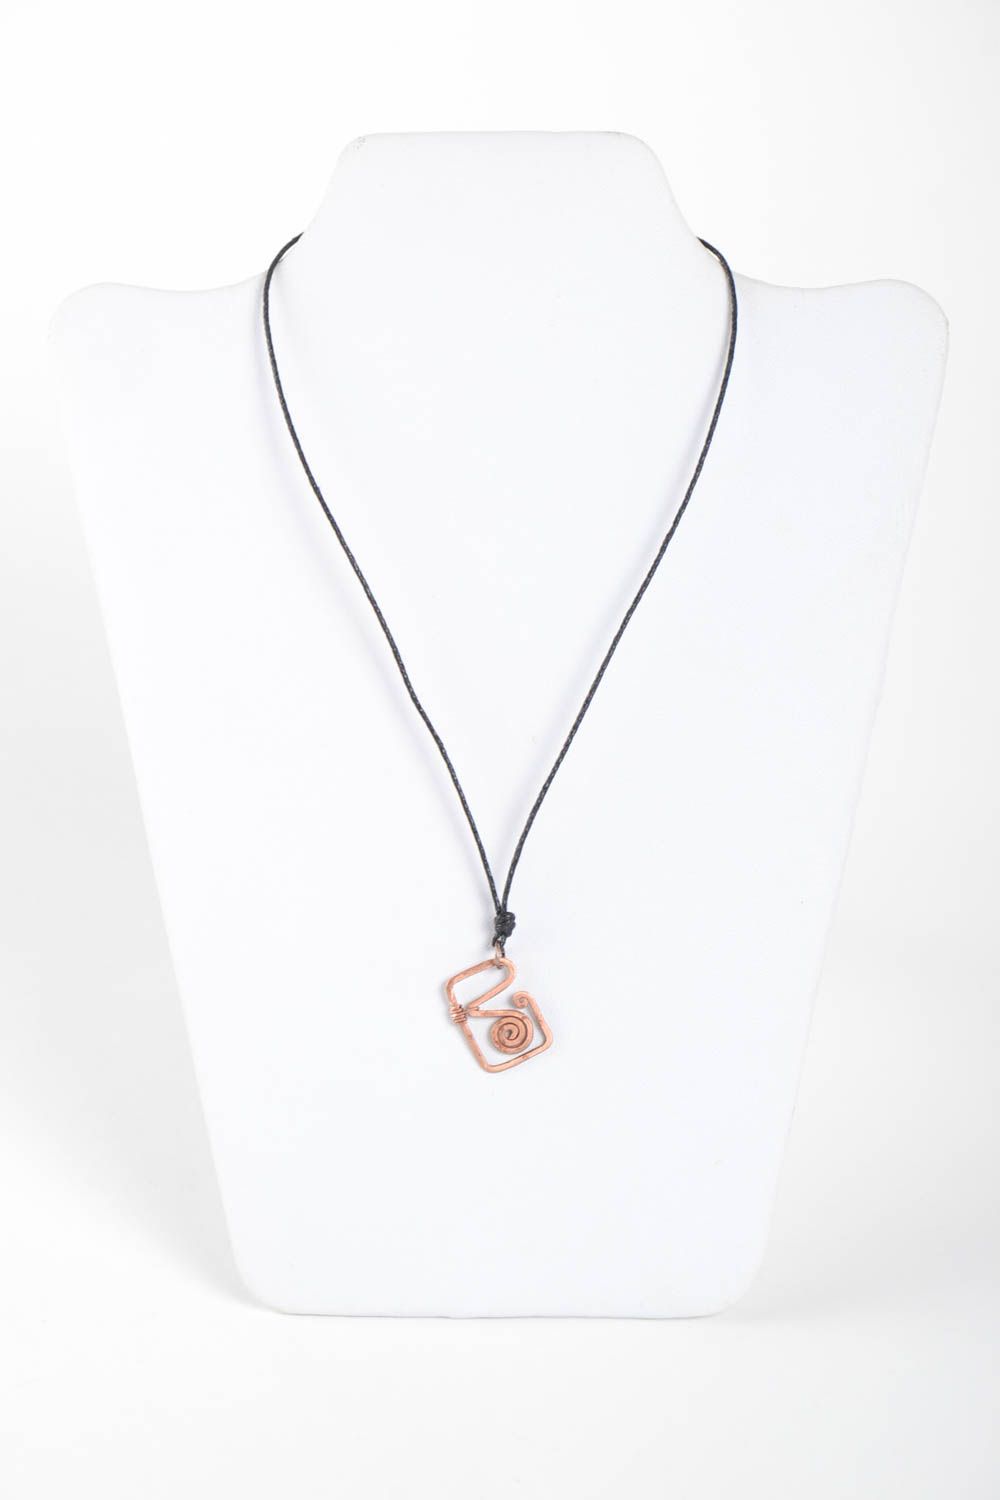 Handmade copper jewelry copper pendant wire wrap accessories for girls photo 2